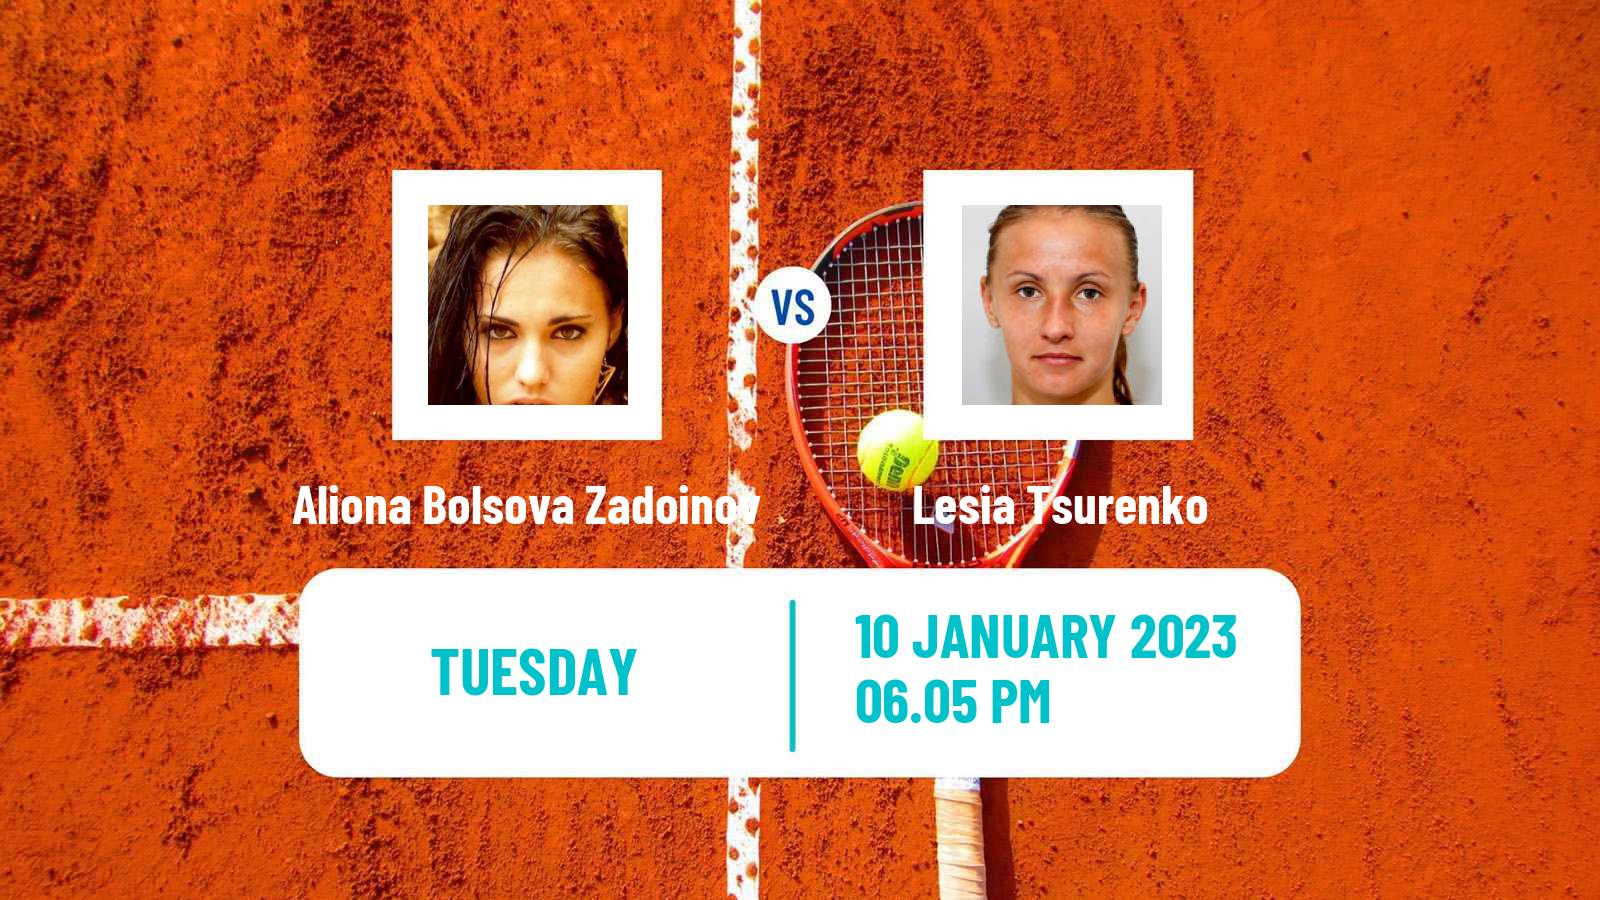 Tennis WTA Australian Open Aliona Bolsova Zadoinov - Lesia Tsurenko